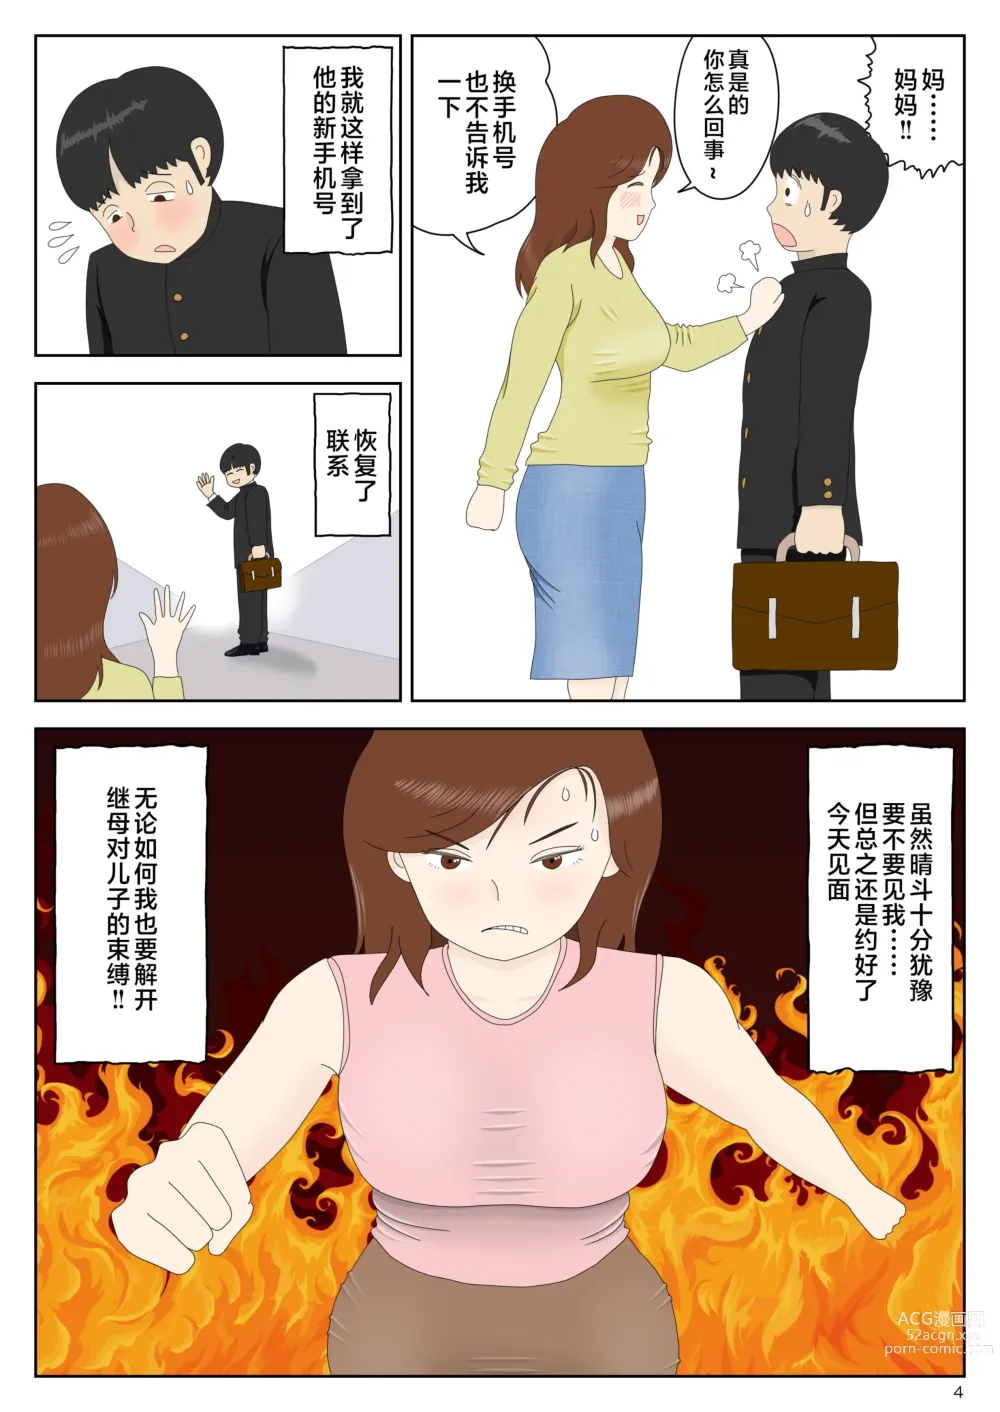 Page 4 of doujinshi Sasou Onna